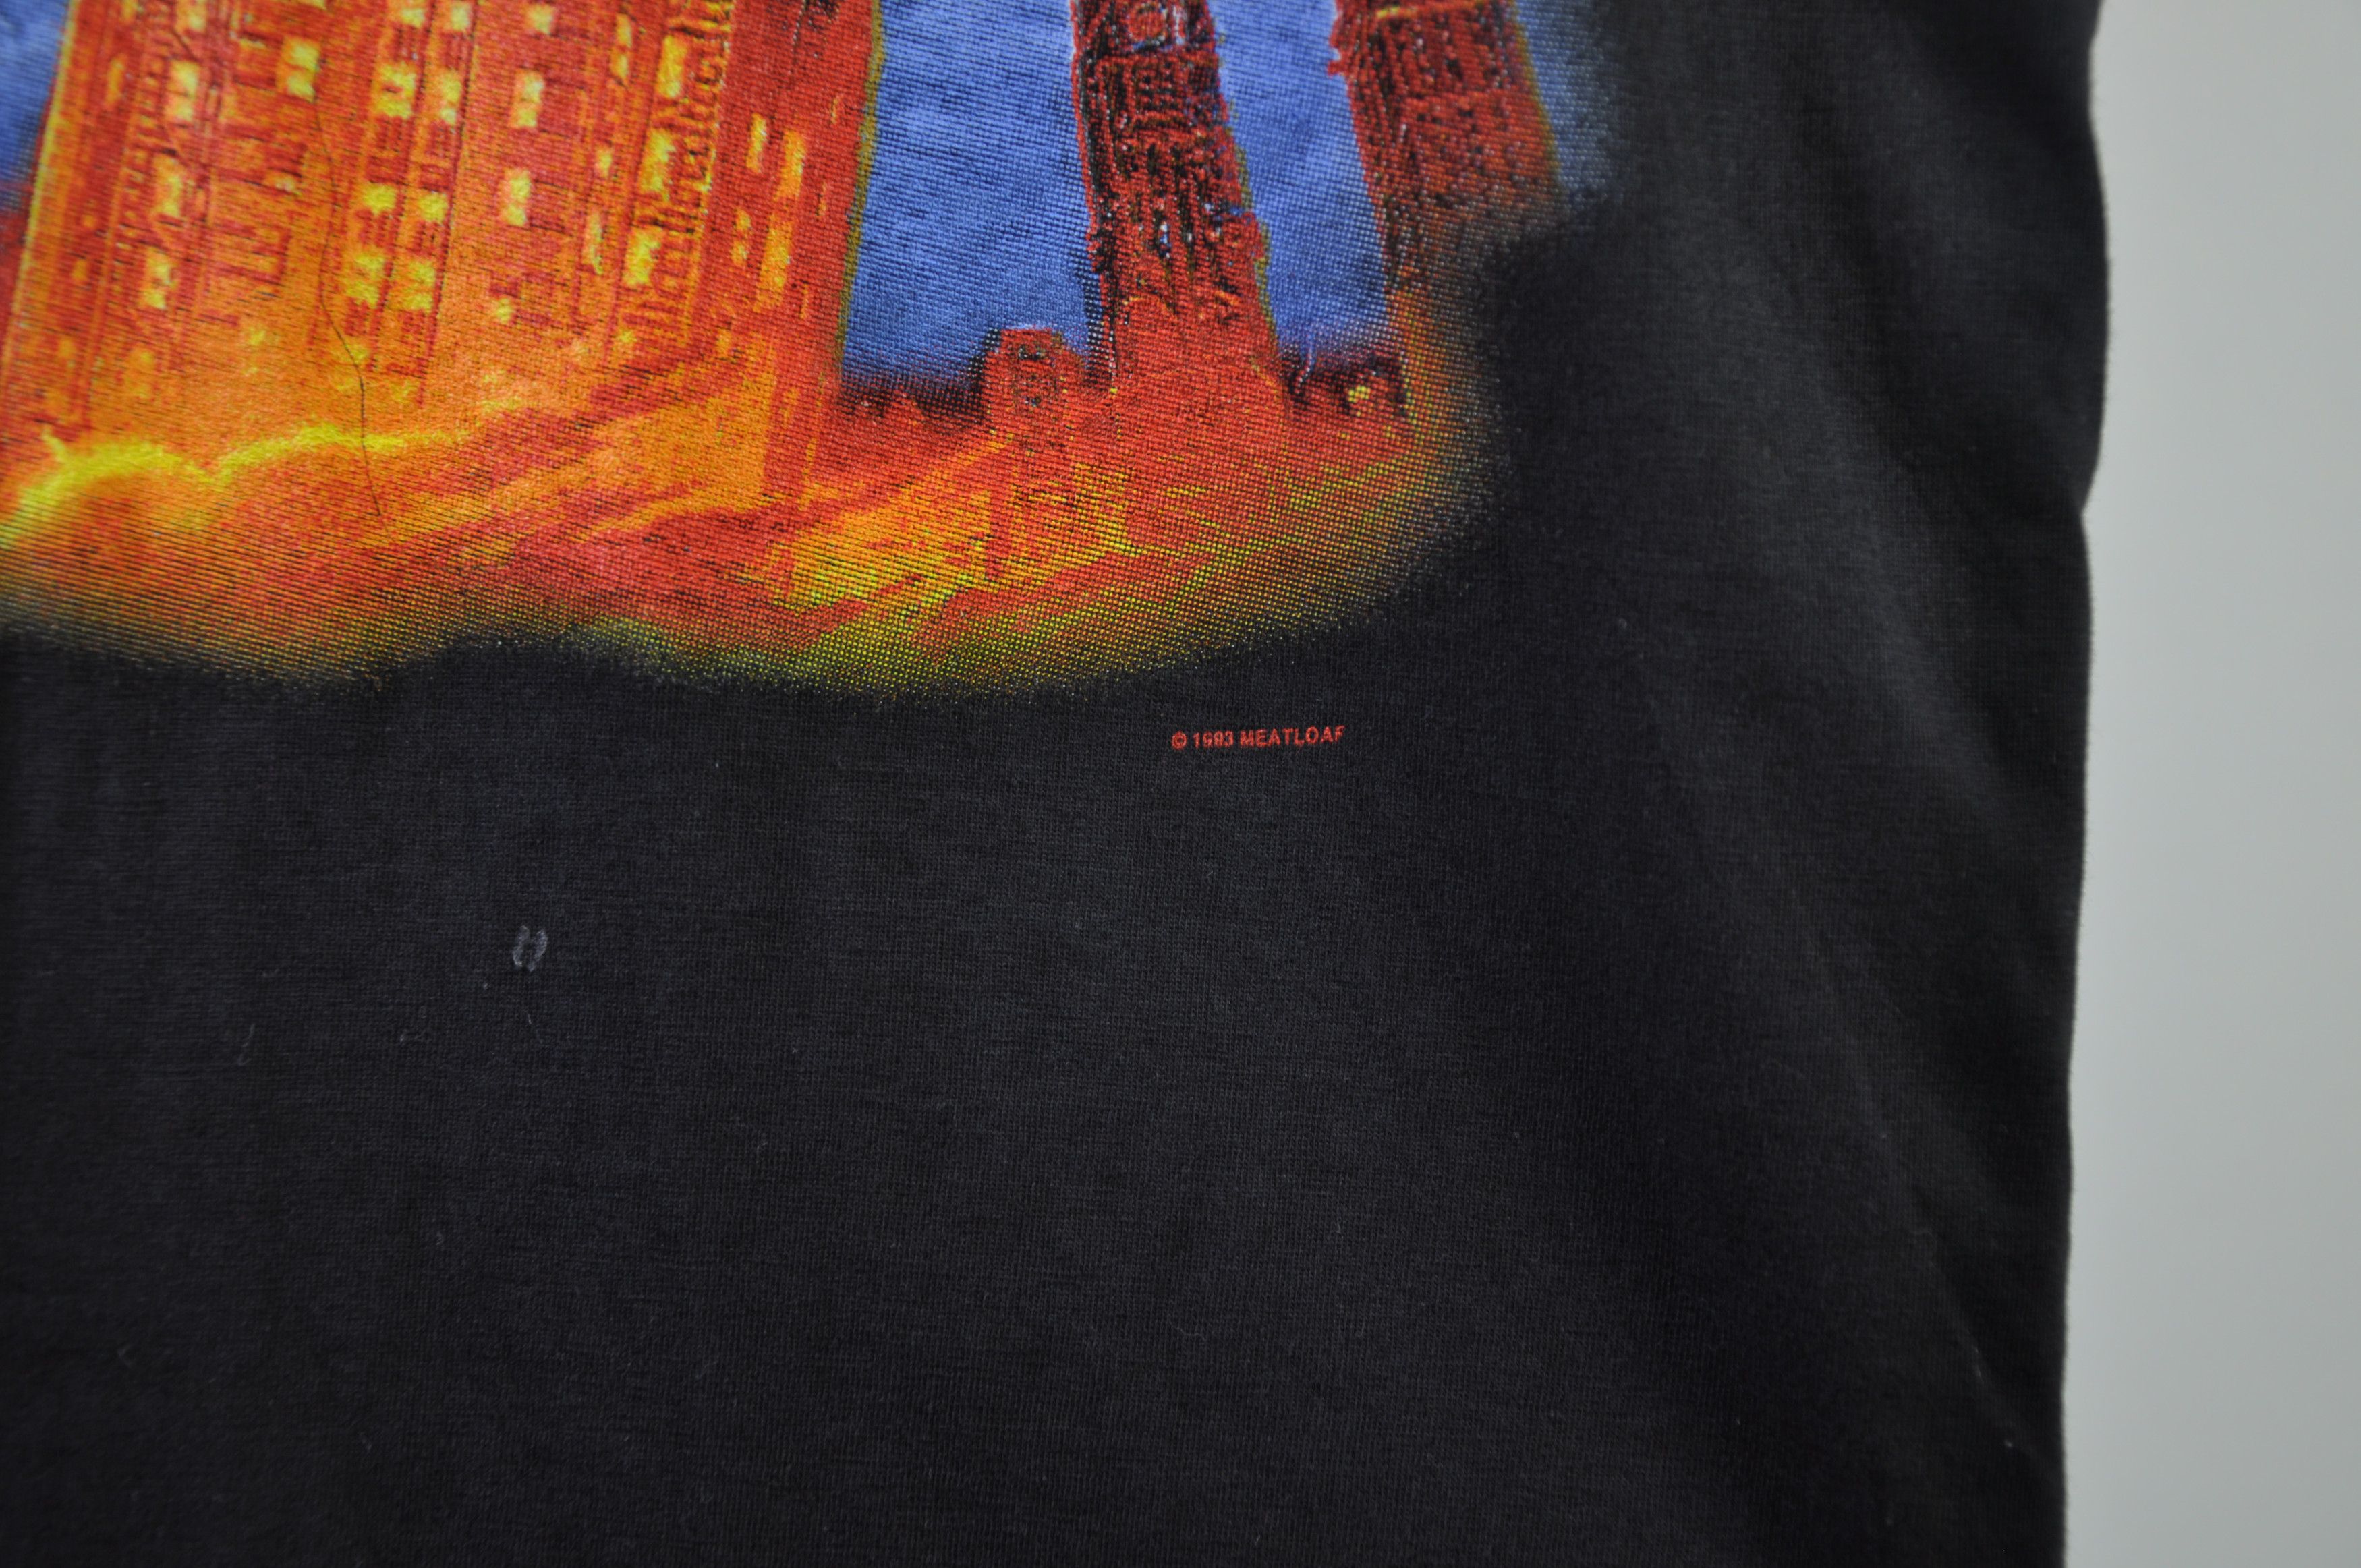 Vintage MEATLOAF 1993 Bat Out Of Hell 2 Tour T Shirt SIZE XL Size US XL / EU 56 / 4 - 3 Thumbnail